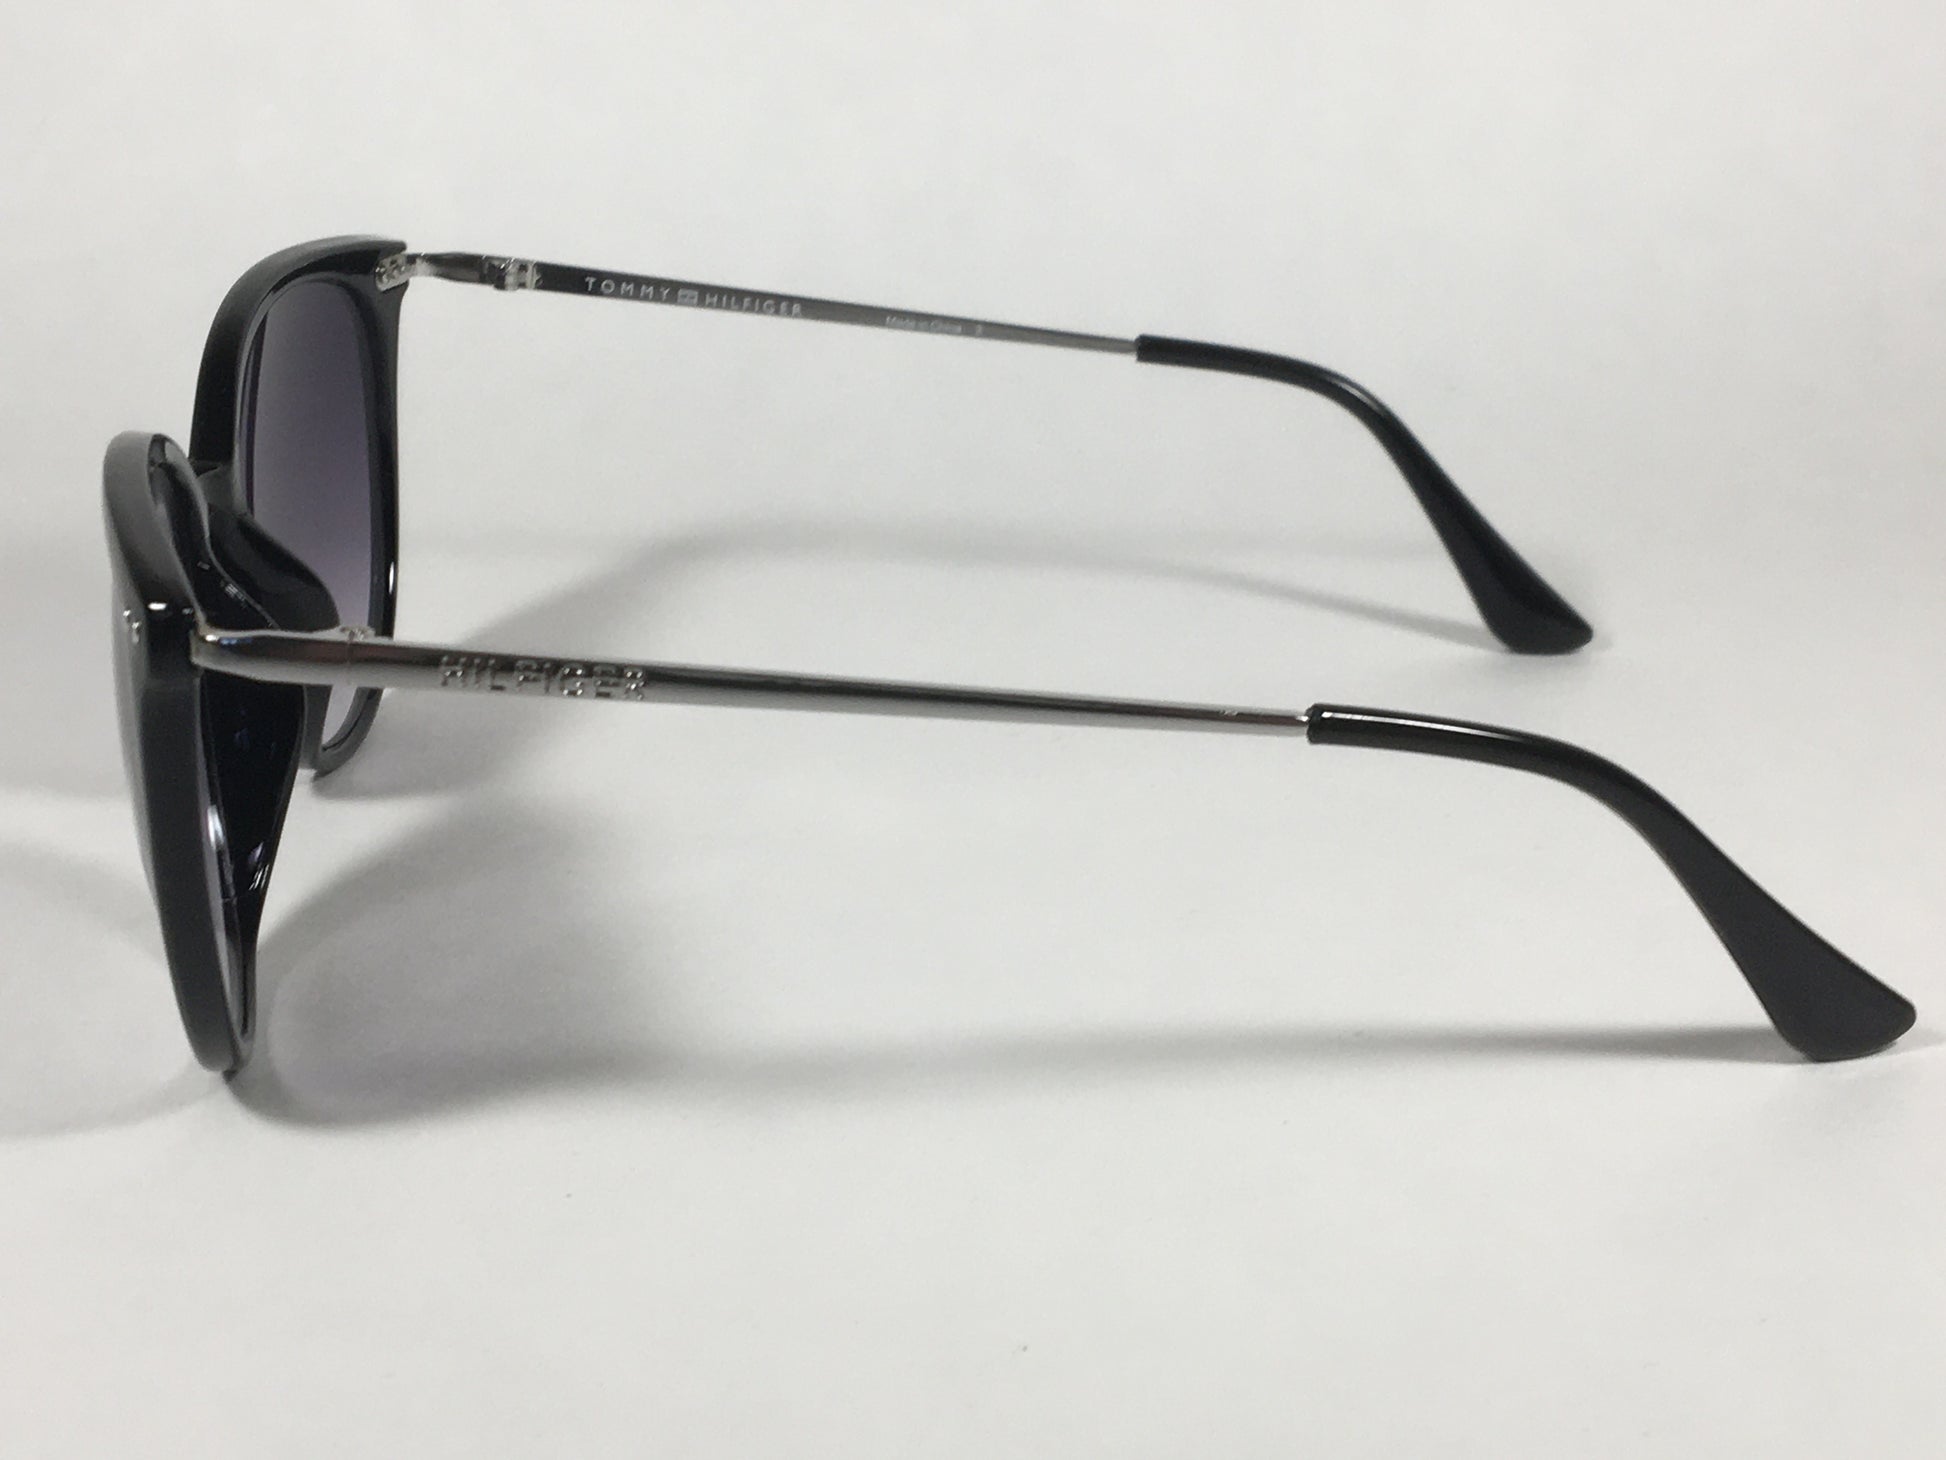 Tommy Hilfiger ’Bellatrix’ WP OL475 Sunglasses Shiny Black Silver Frame Gray Gradient Lens